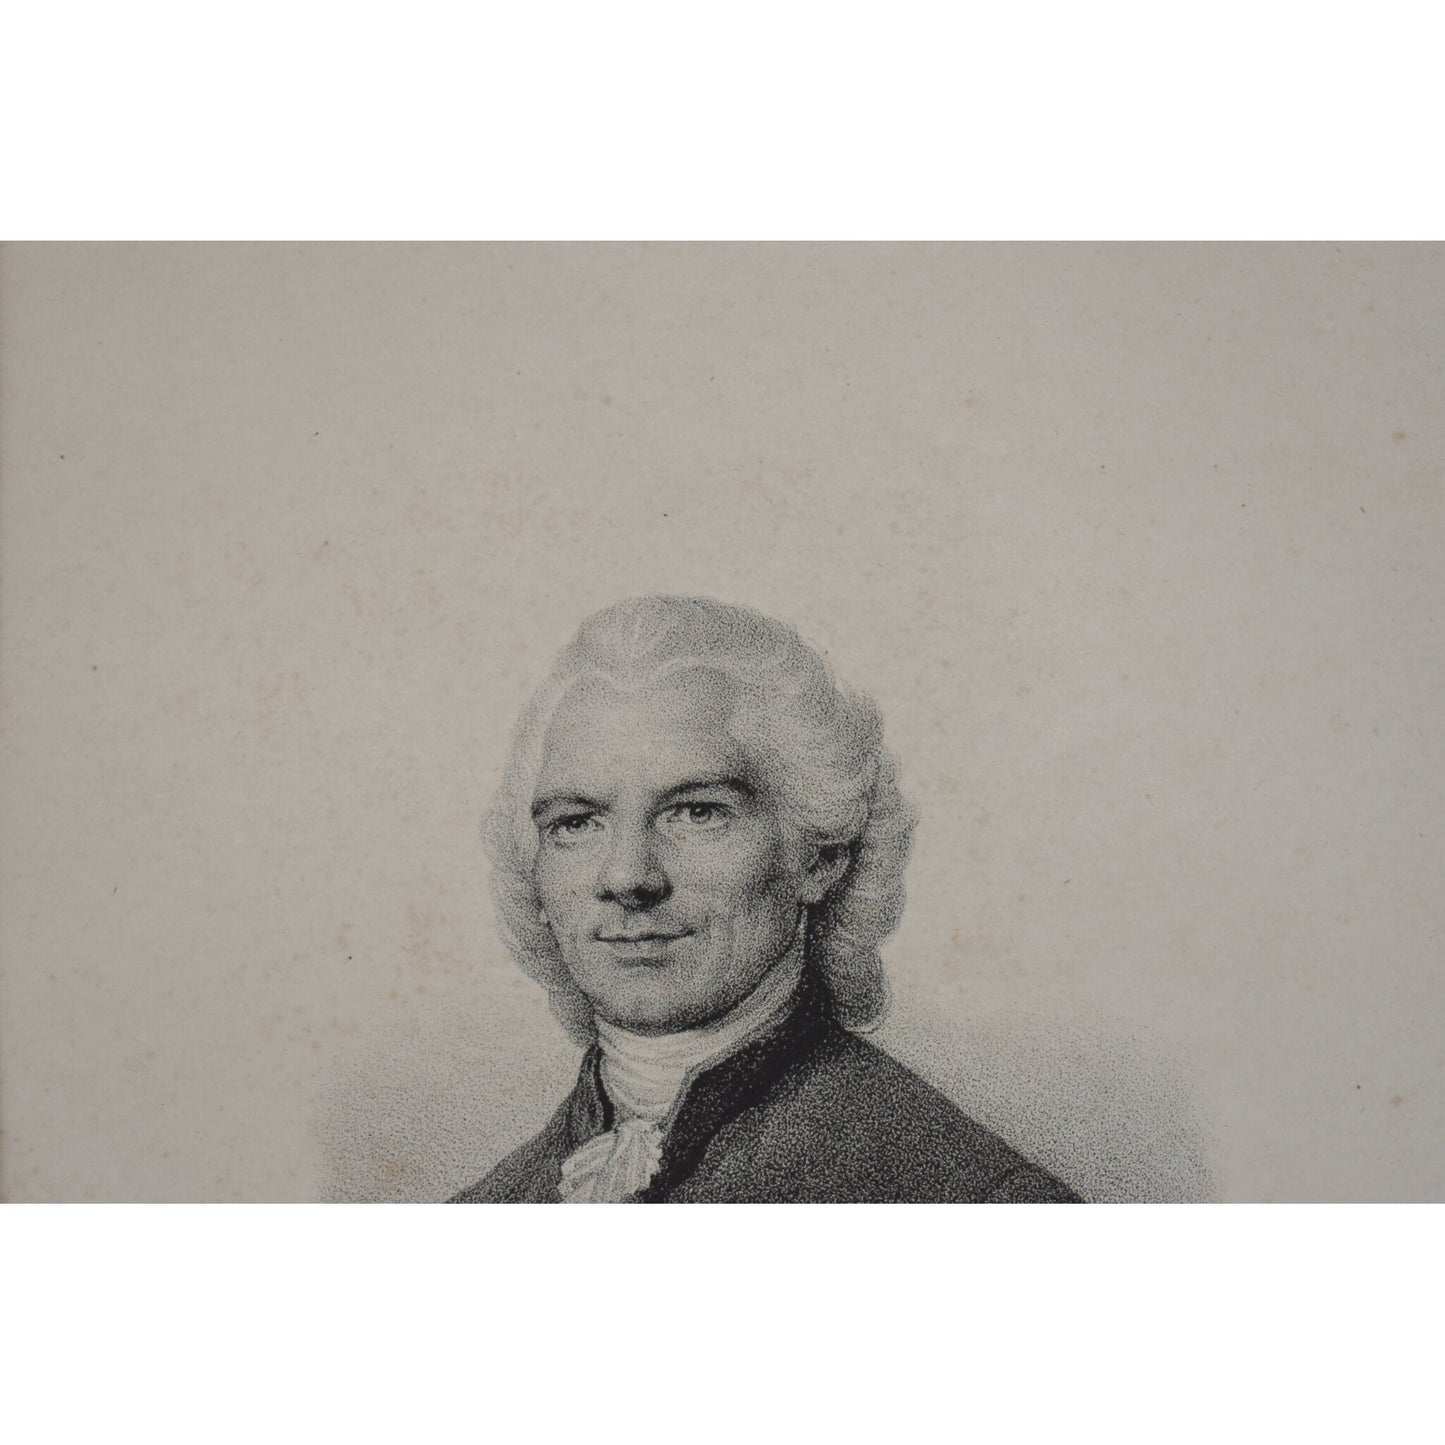 Antique print lithograph portrait of French poet Jacques Delille, by Francois Delpech, for sale at Winckelmann Gallery